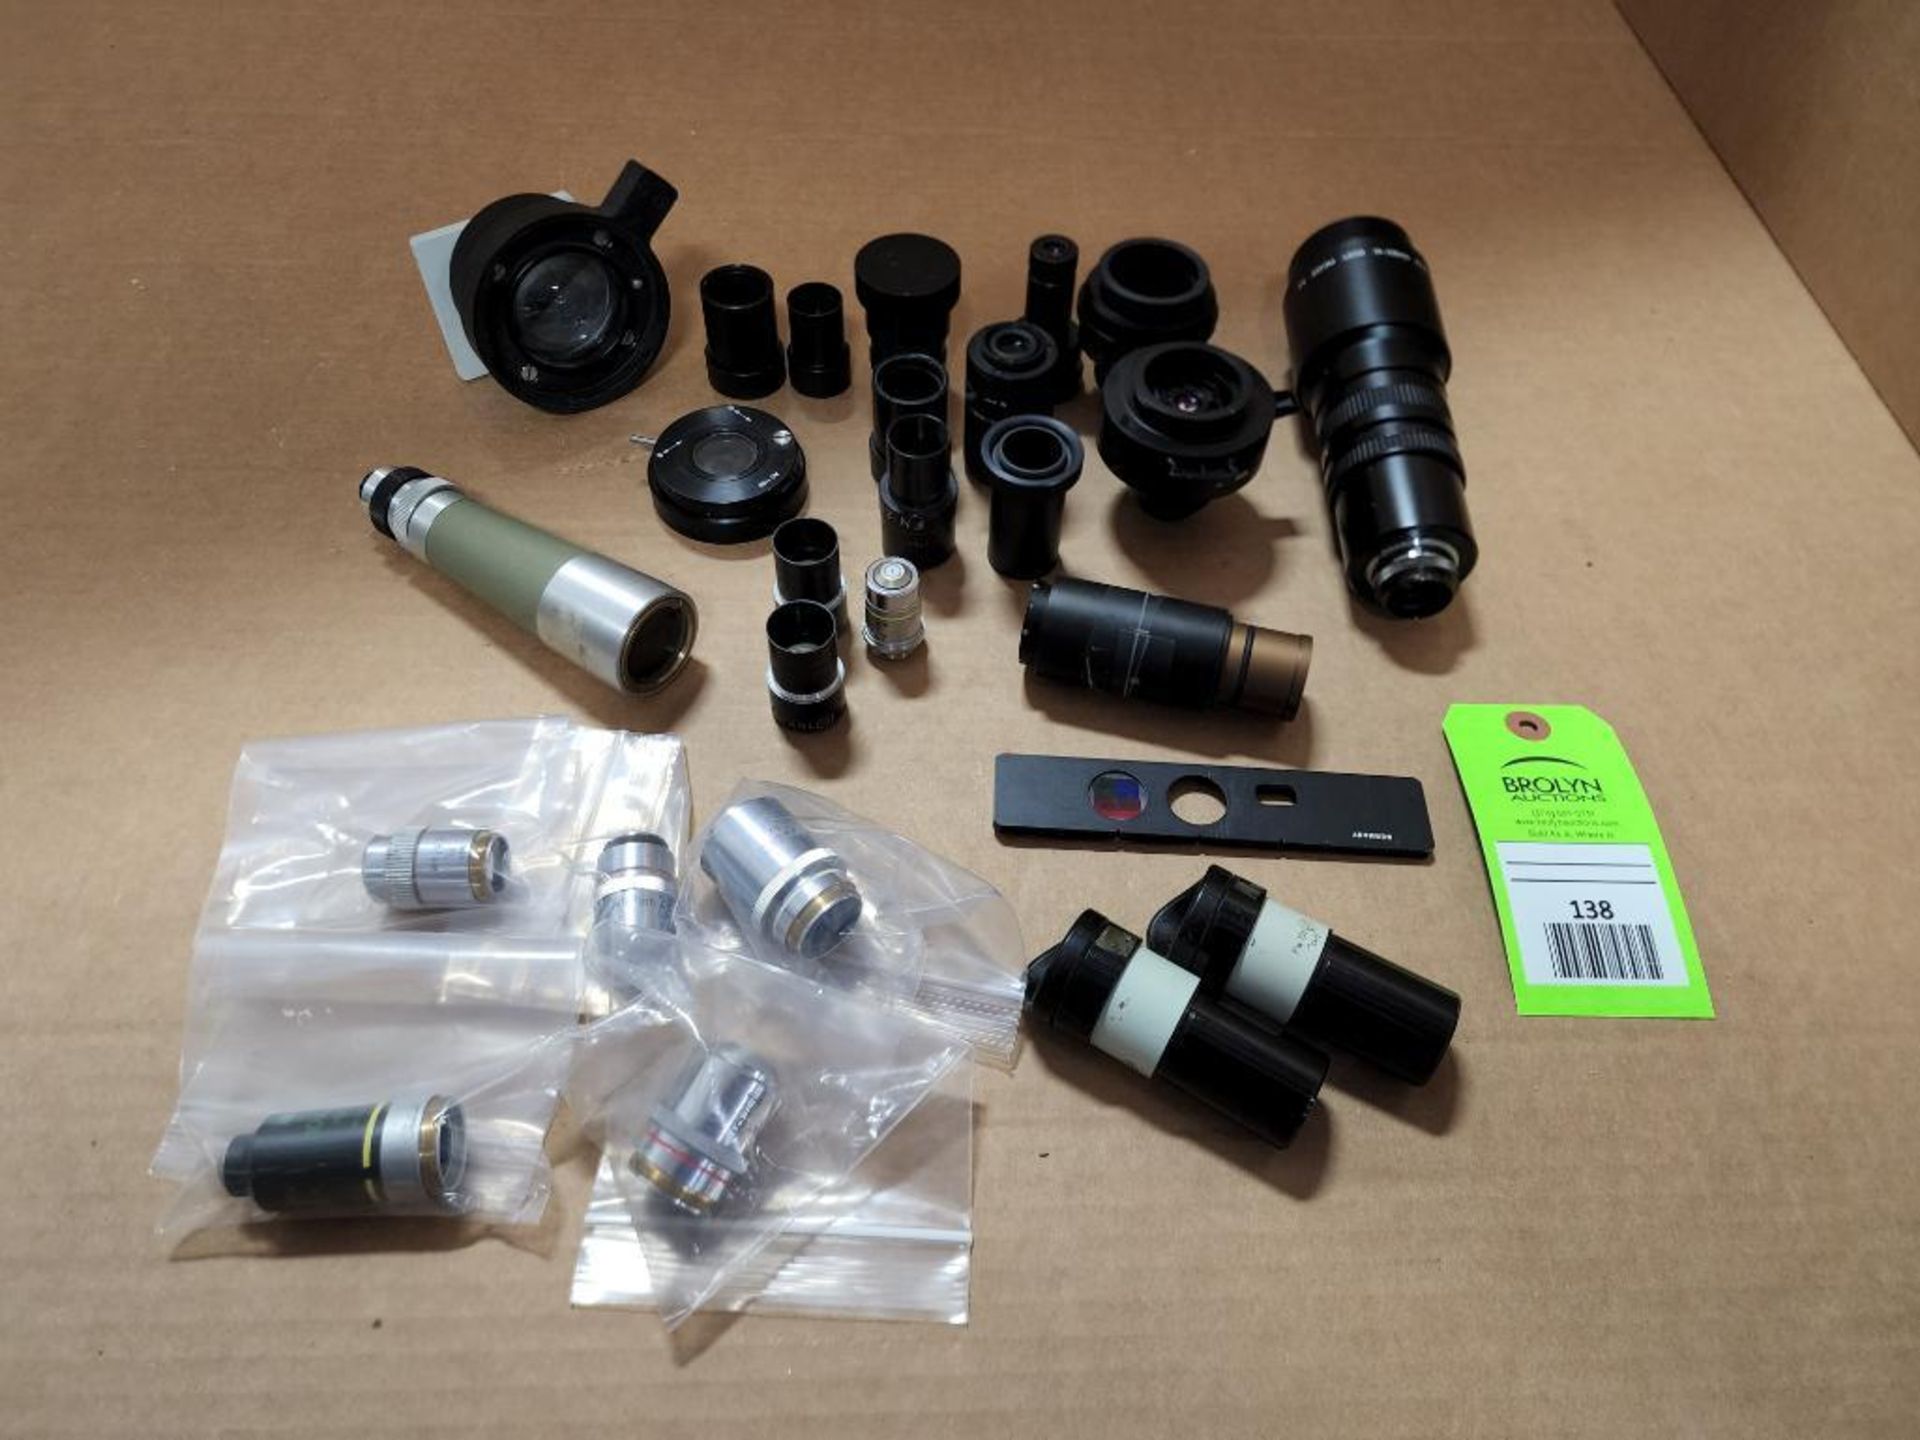 Assorted microscope optics equipment.